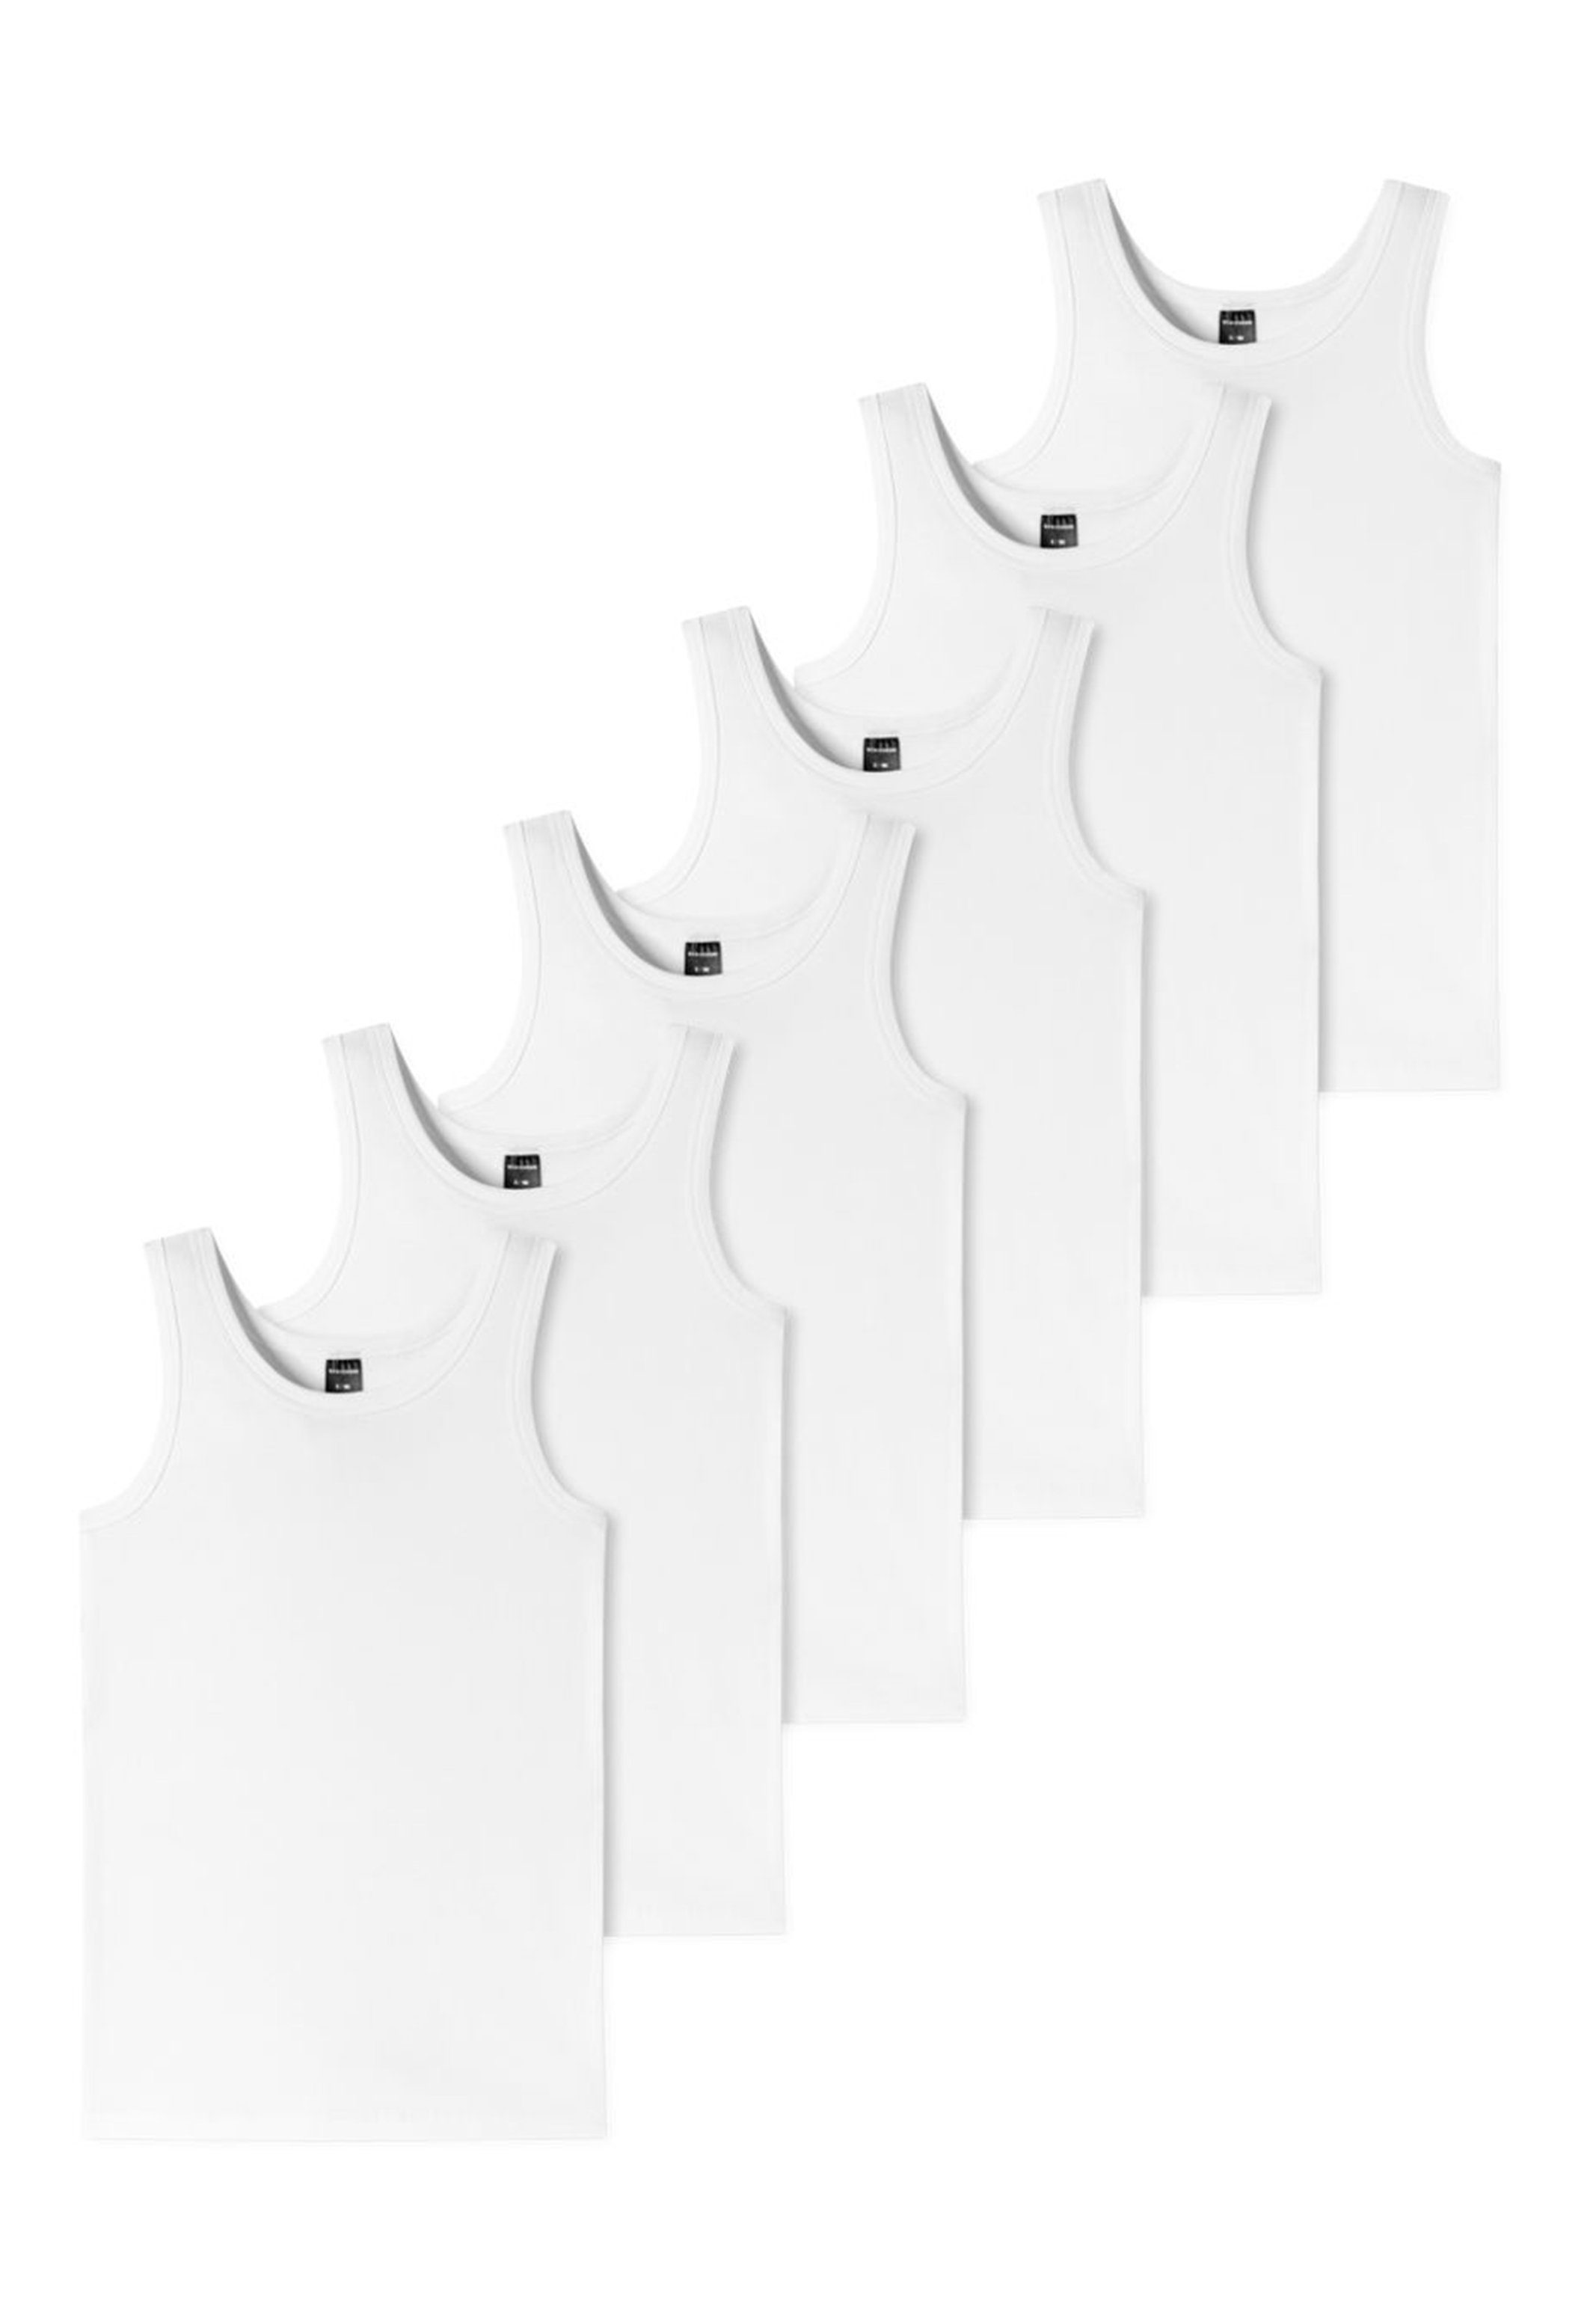 Schiesser Unterhemd 6er Pack Teens Boys 95/5 Organic Cotton (Spar-Set, 6-St) Unterhemd / Tanktop - Baumwolle - Runder Halsausschnitt Weiß